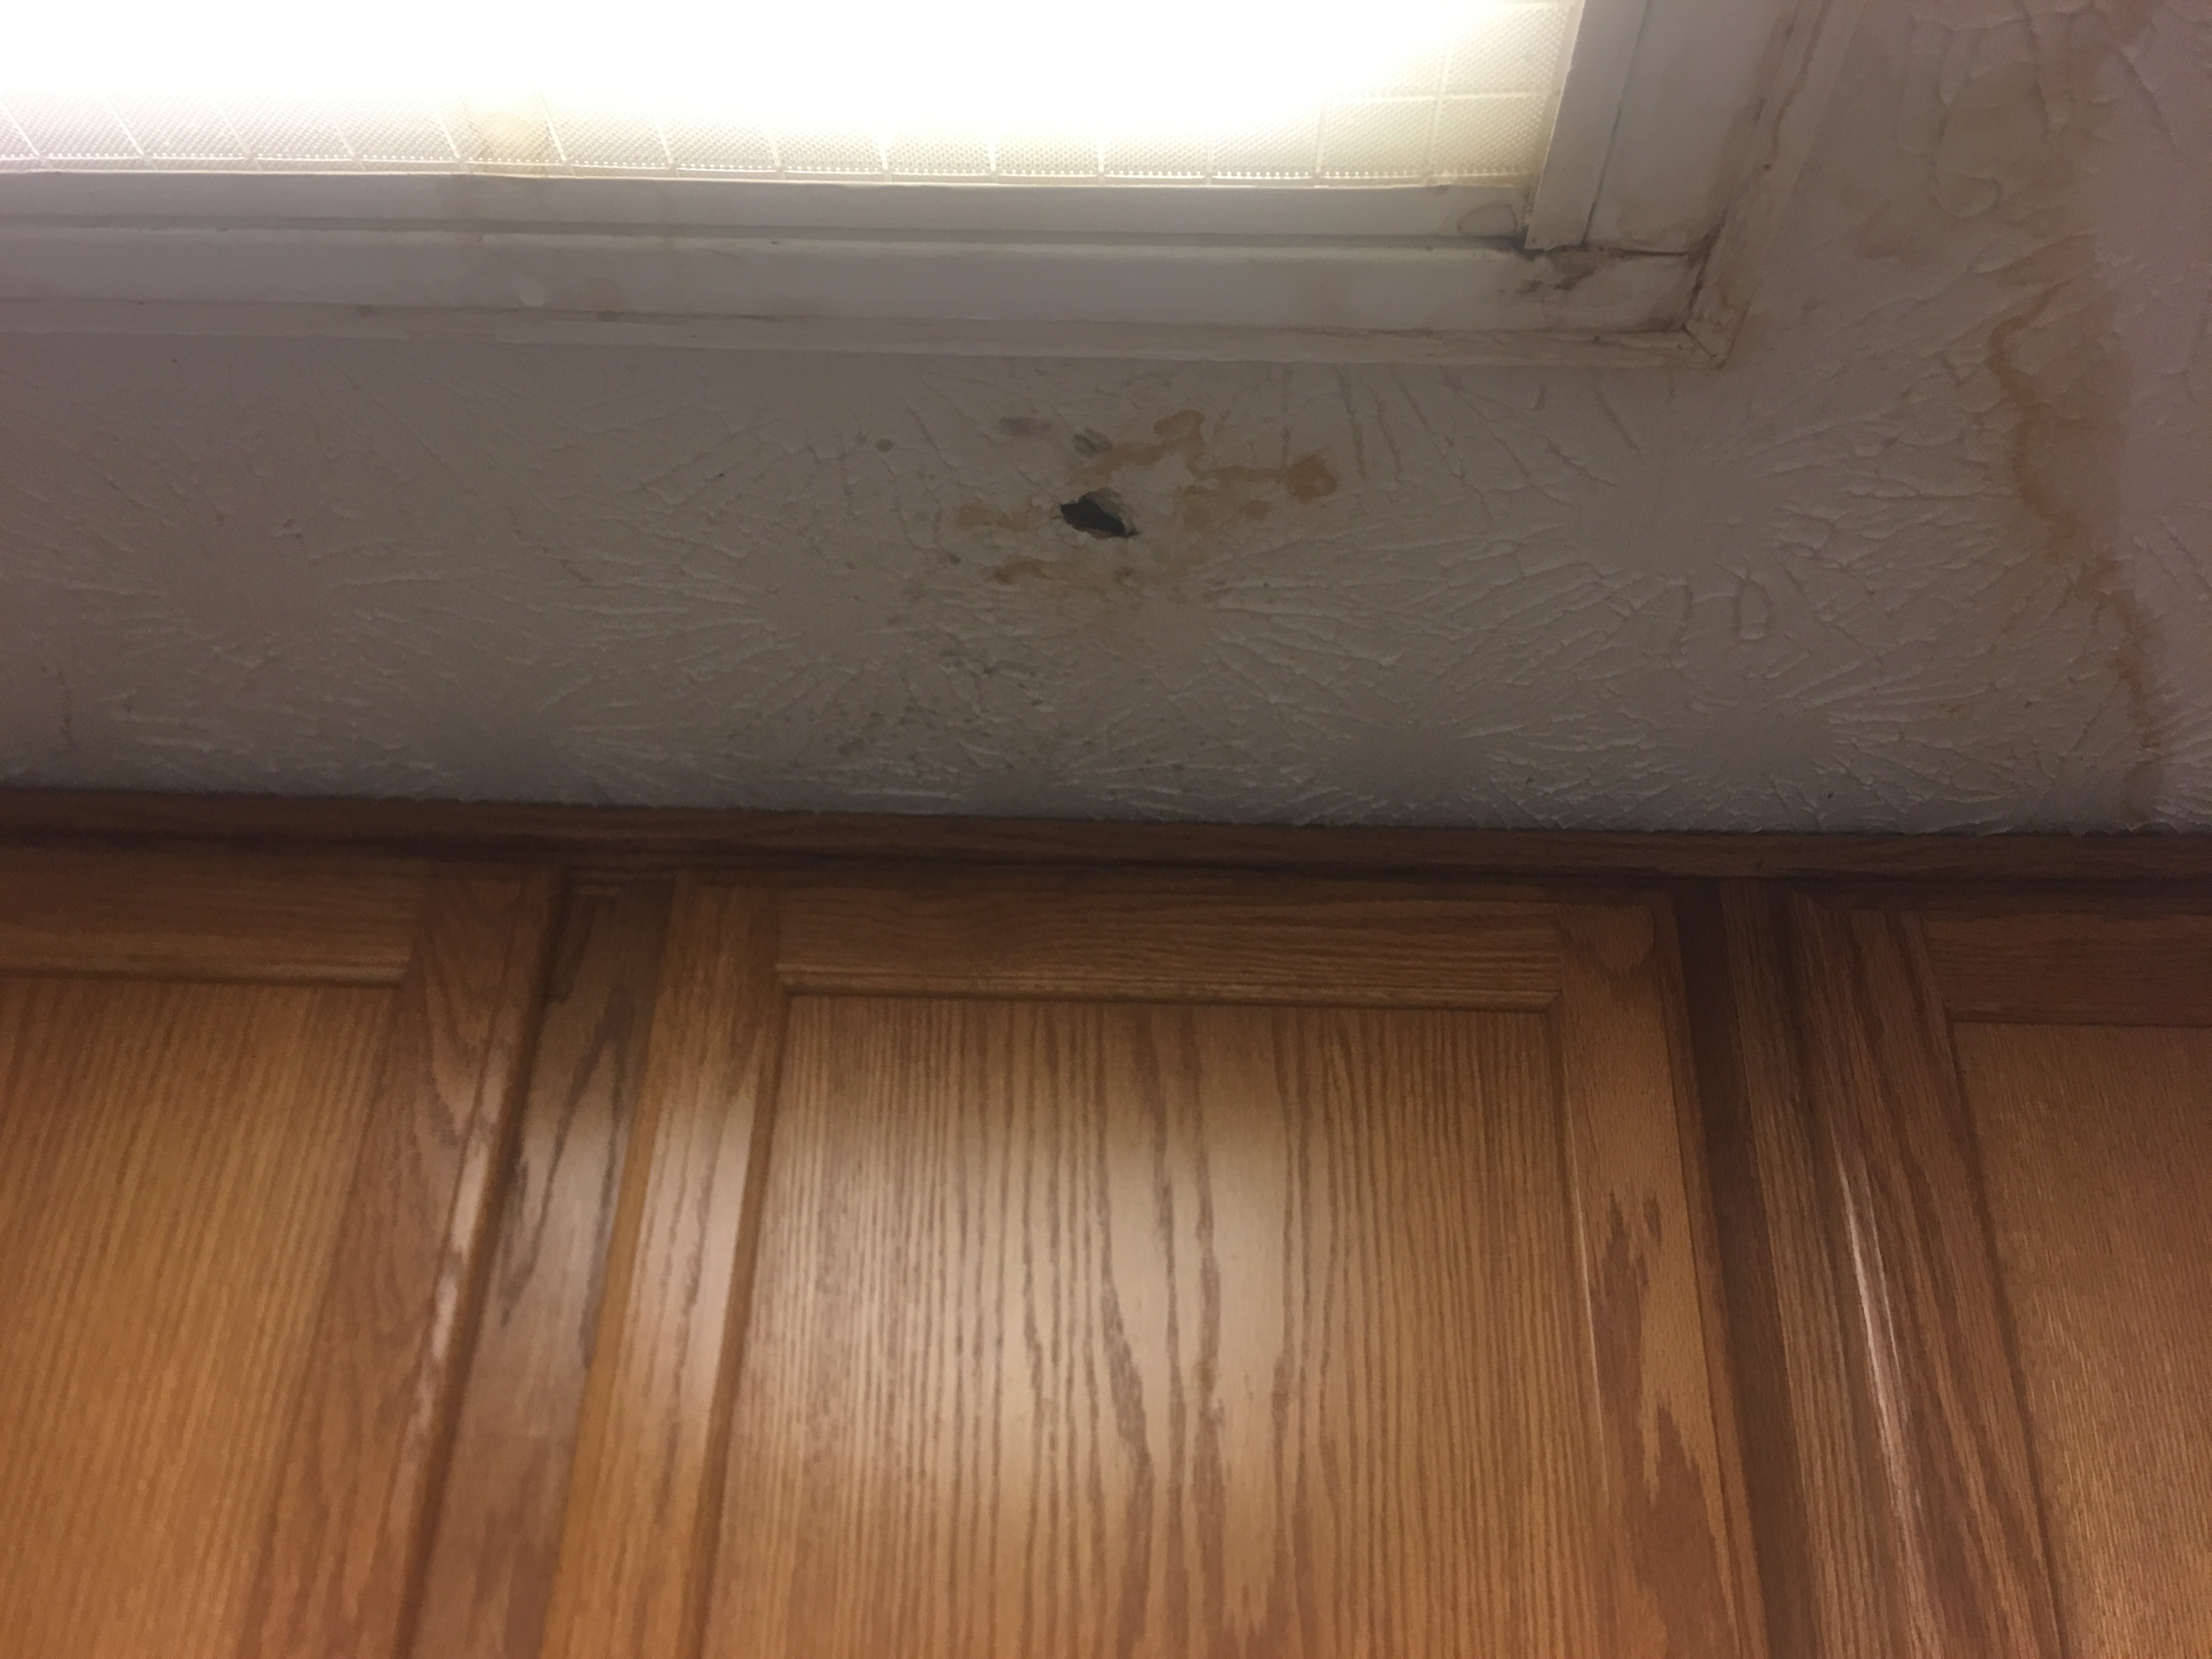 Bad leak caused finger to go through-Mold?